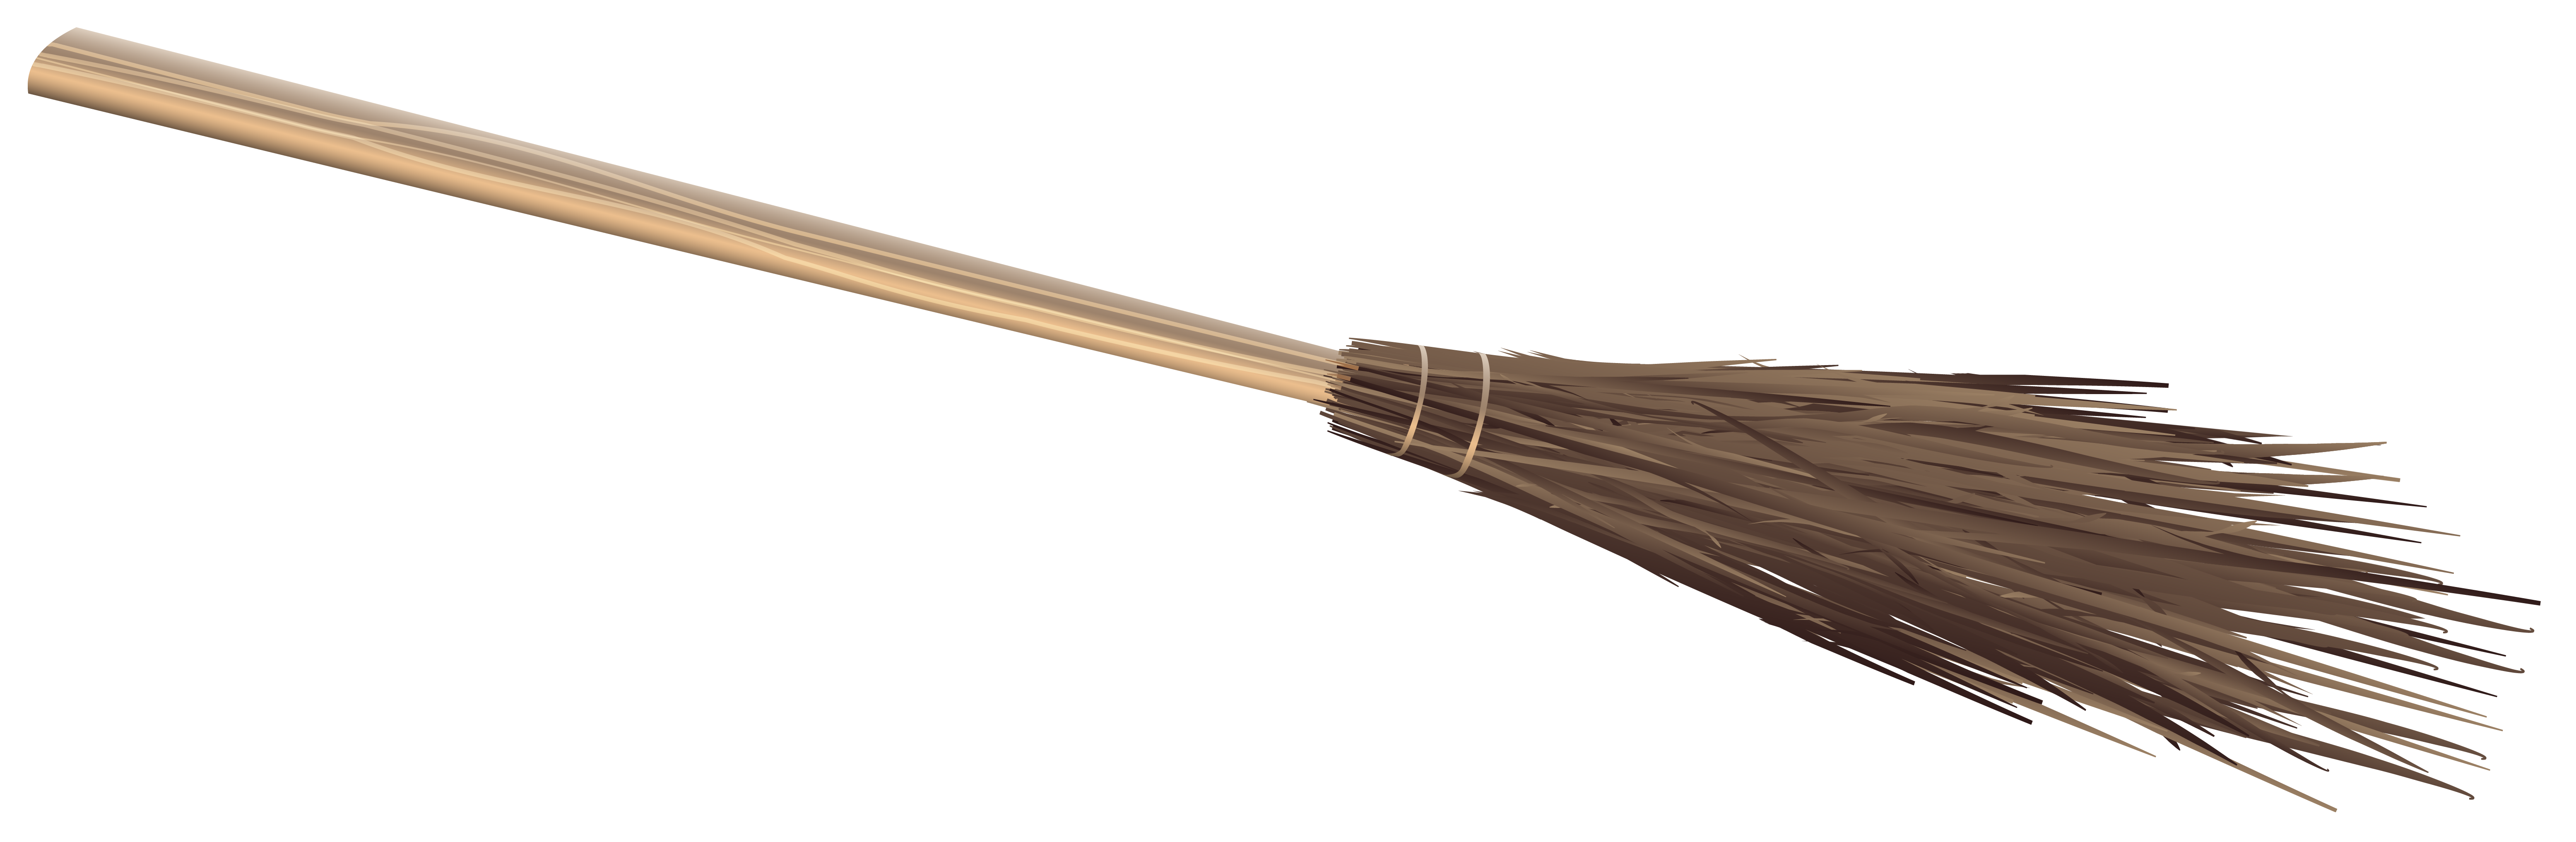 Hard Broom PNG - 148877